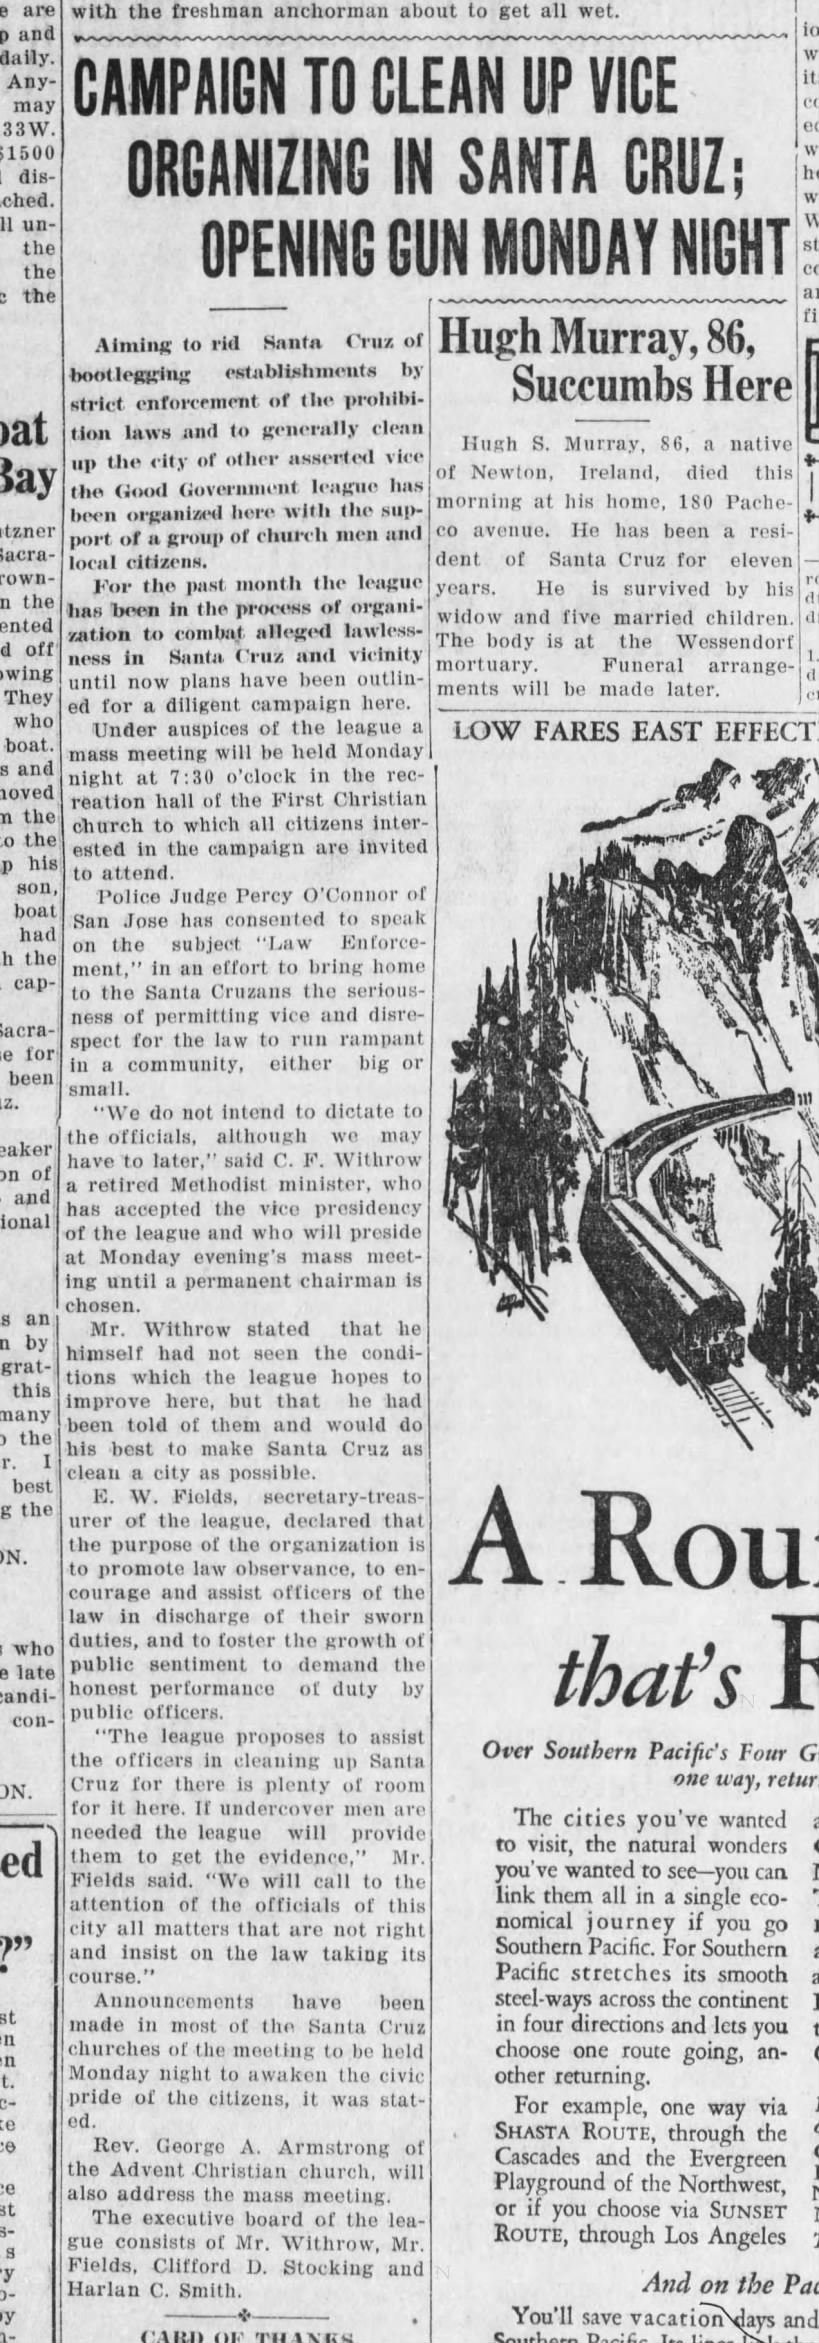 Santa Cruz Evening News, 22 May 1929, Page 2, Column 2